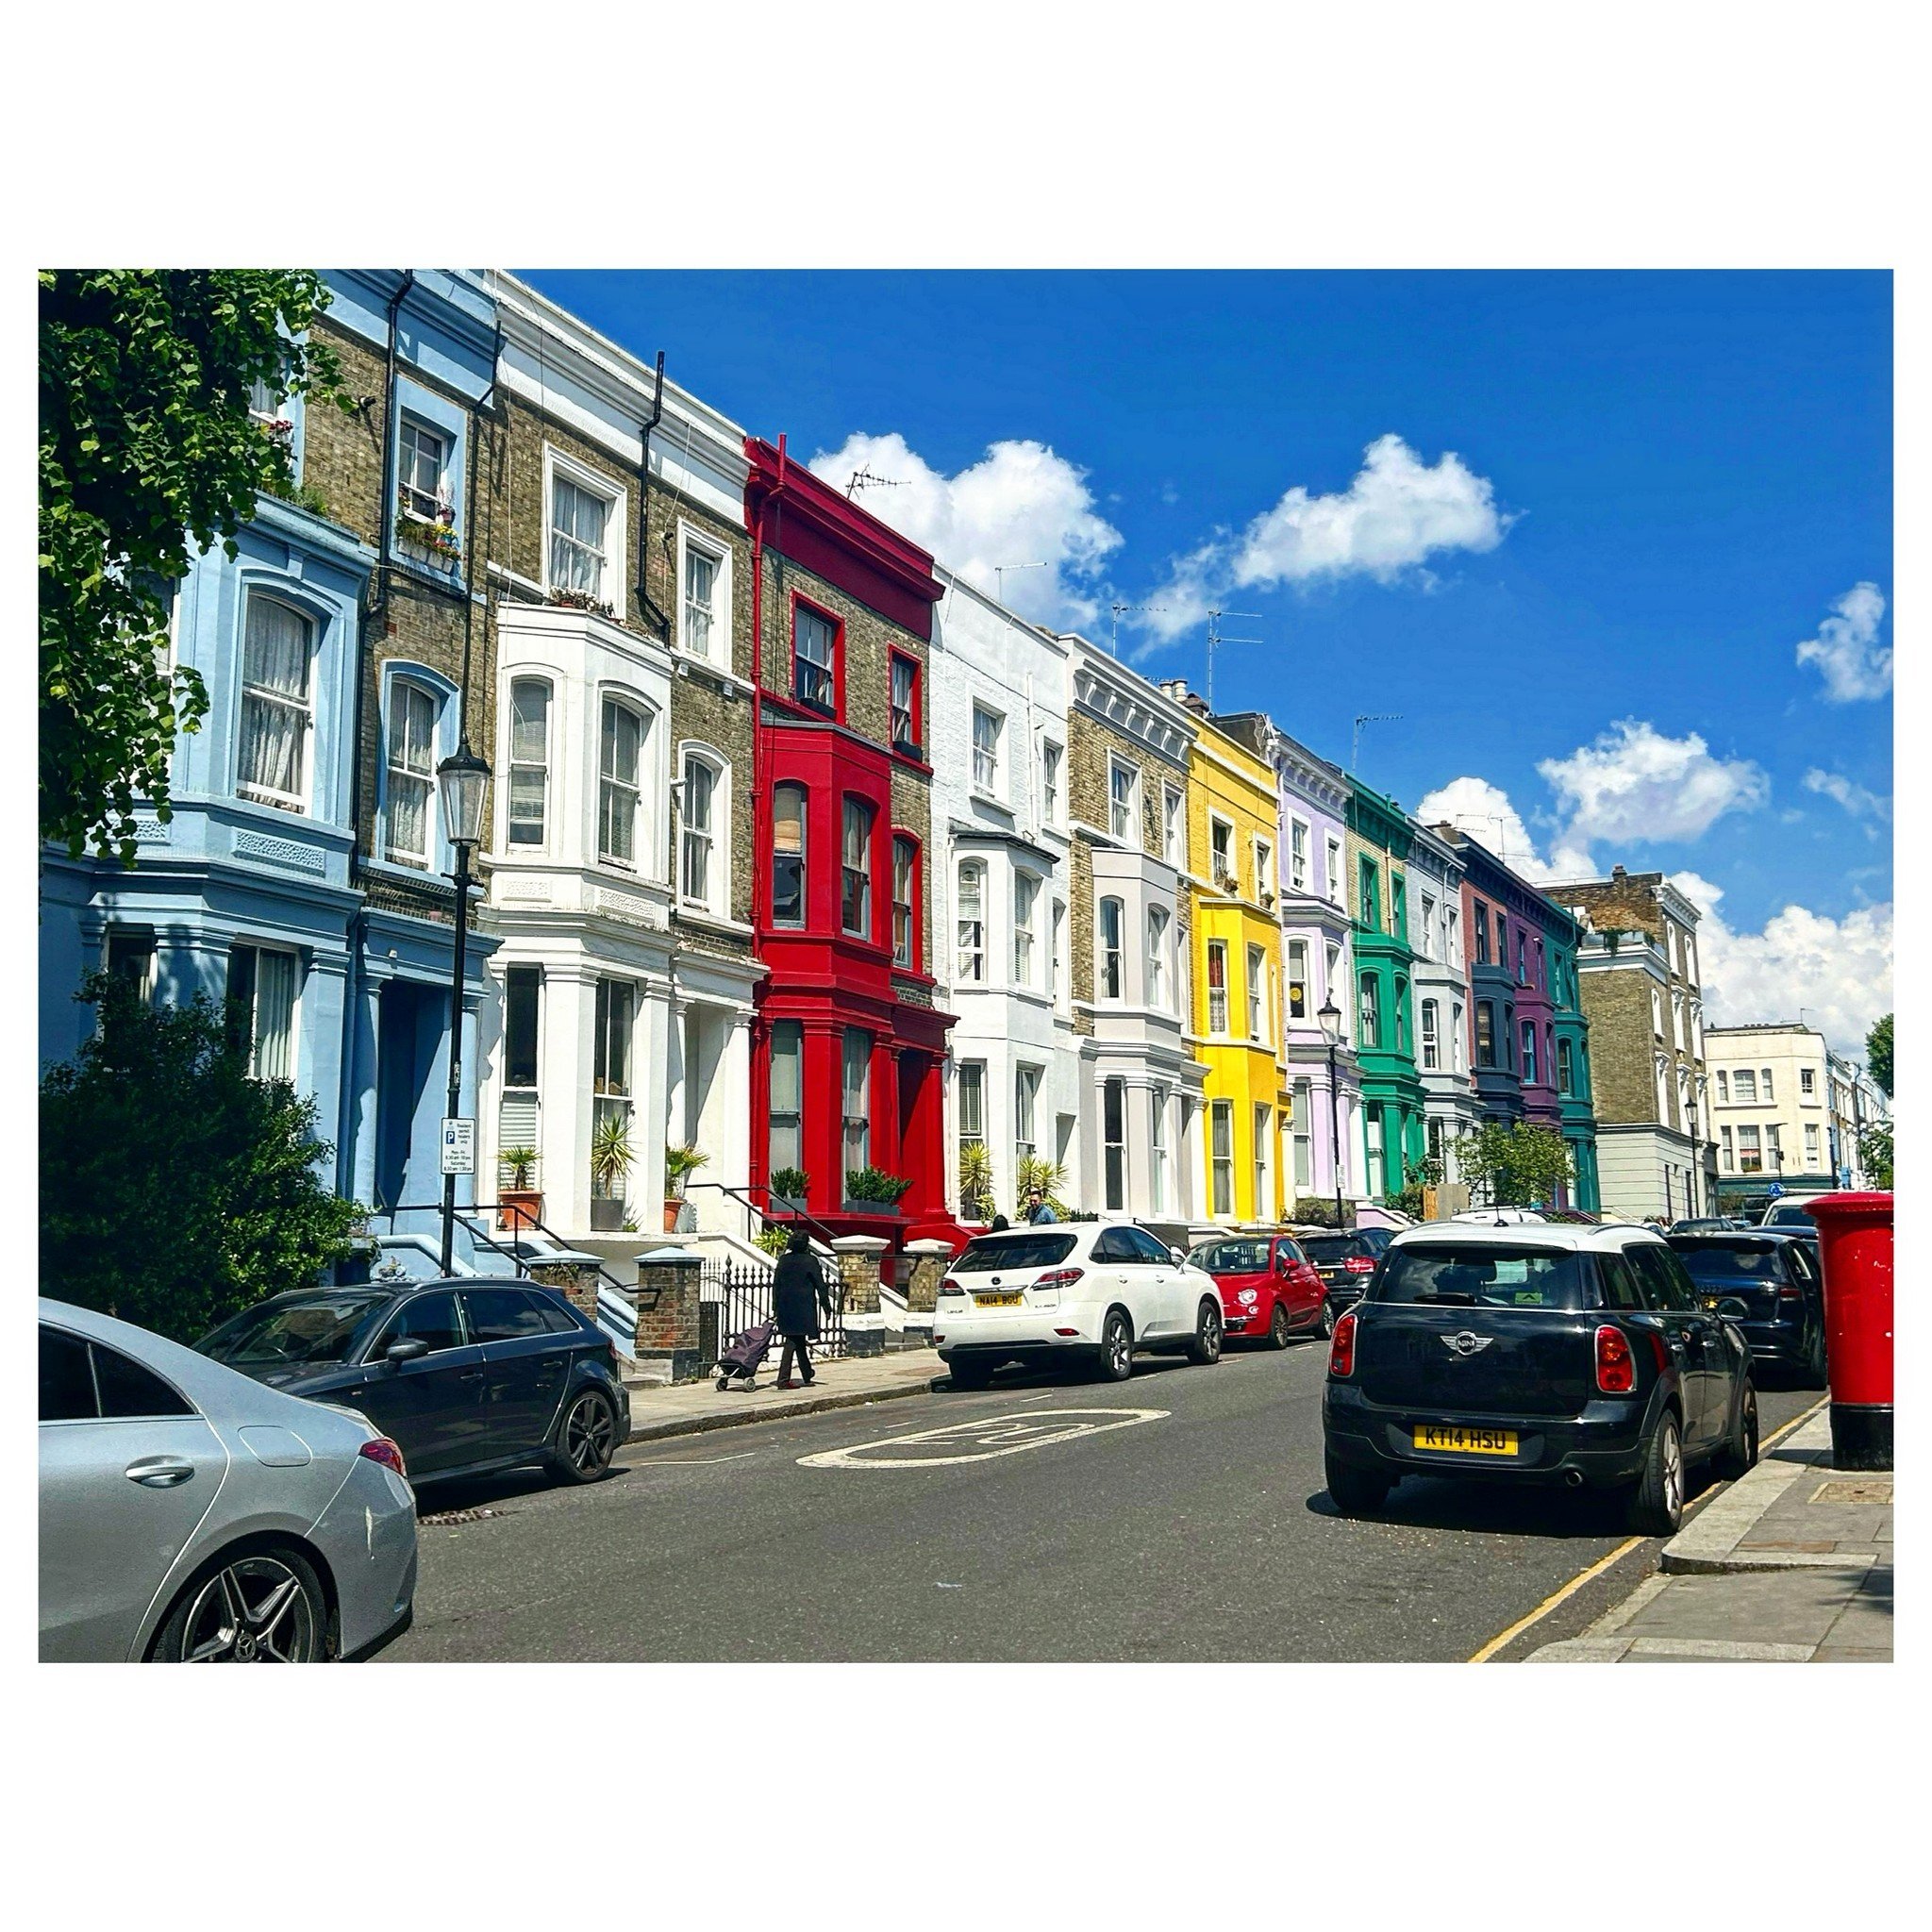 #Rainbow #townhouses #nottinghill #londonuk.
🩷❤️🧡💛💚🩵💙💜
.
.
.
#inspiration